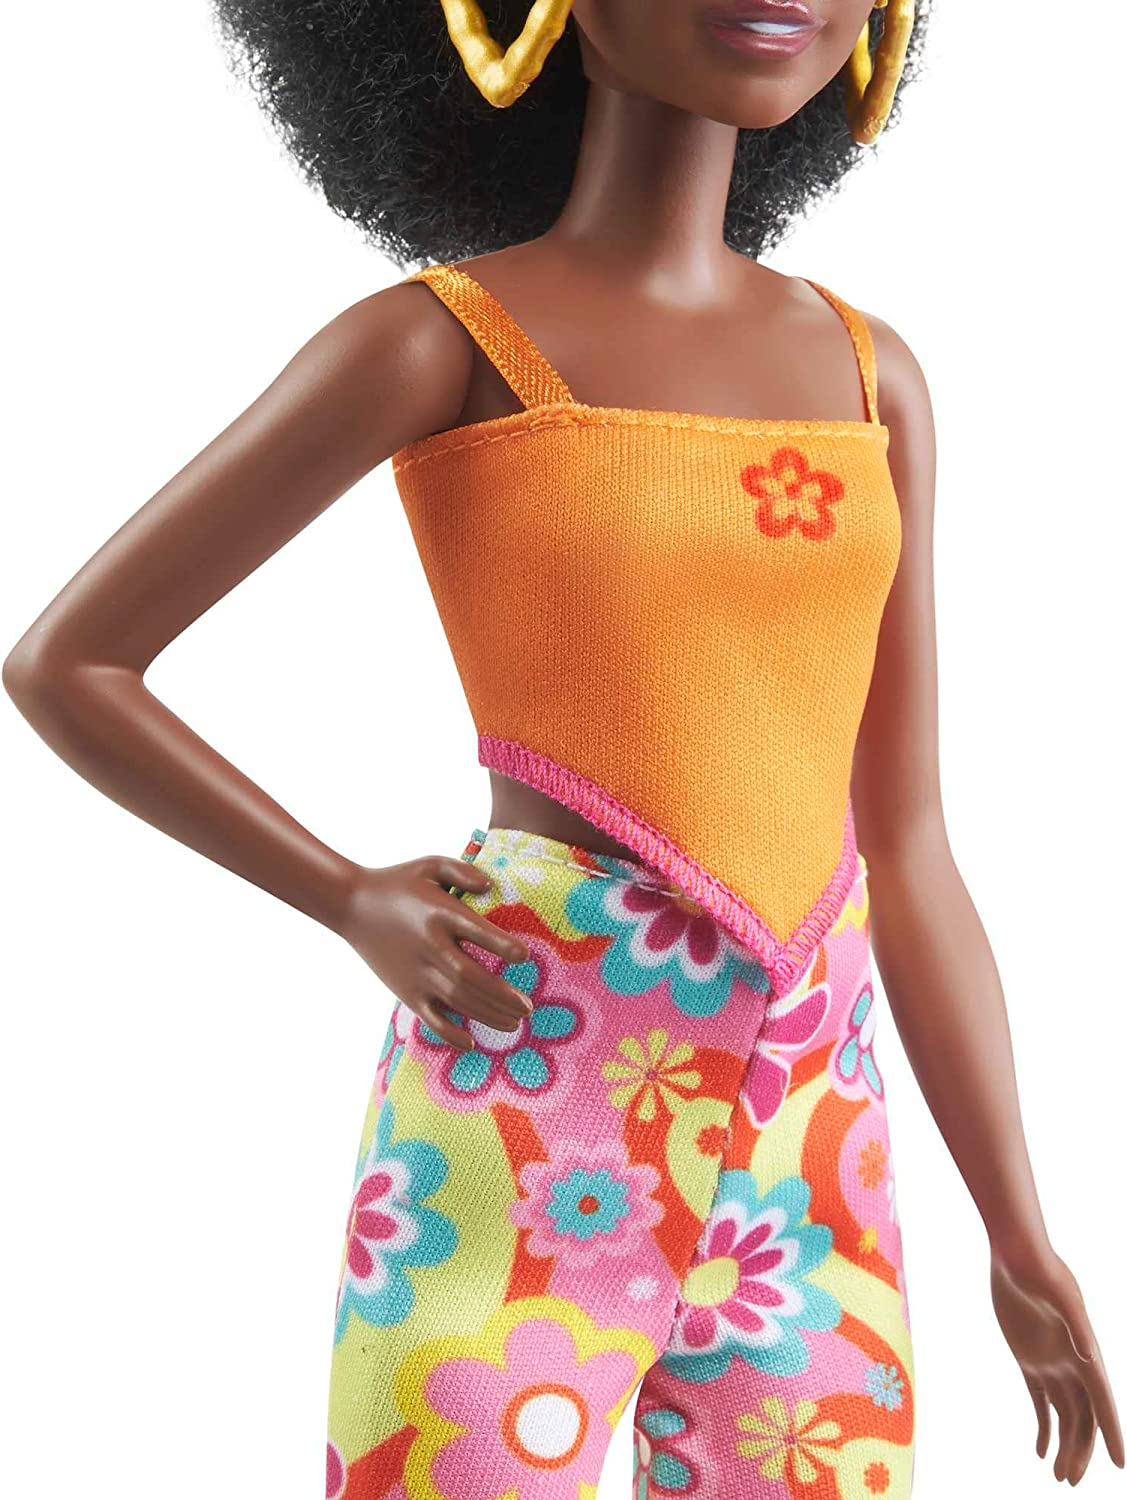 Barbie  Boneca, brinquedos infantis, cabelo preto encaracolado e tipo de corpo pequeno, Barbie Fashionistas, roupas e acessórios no estilo Y2K